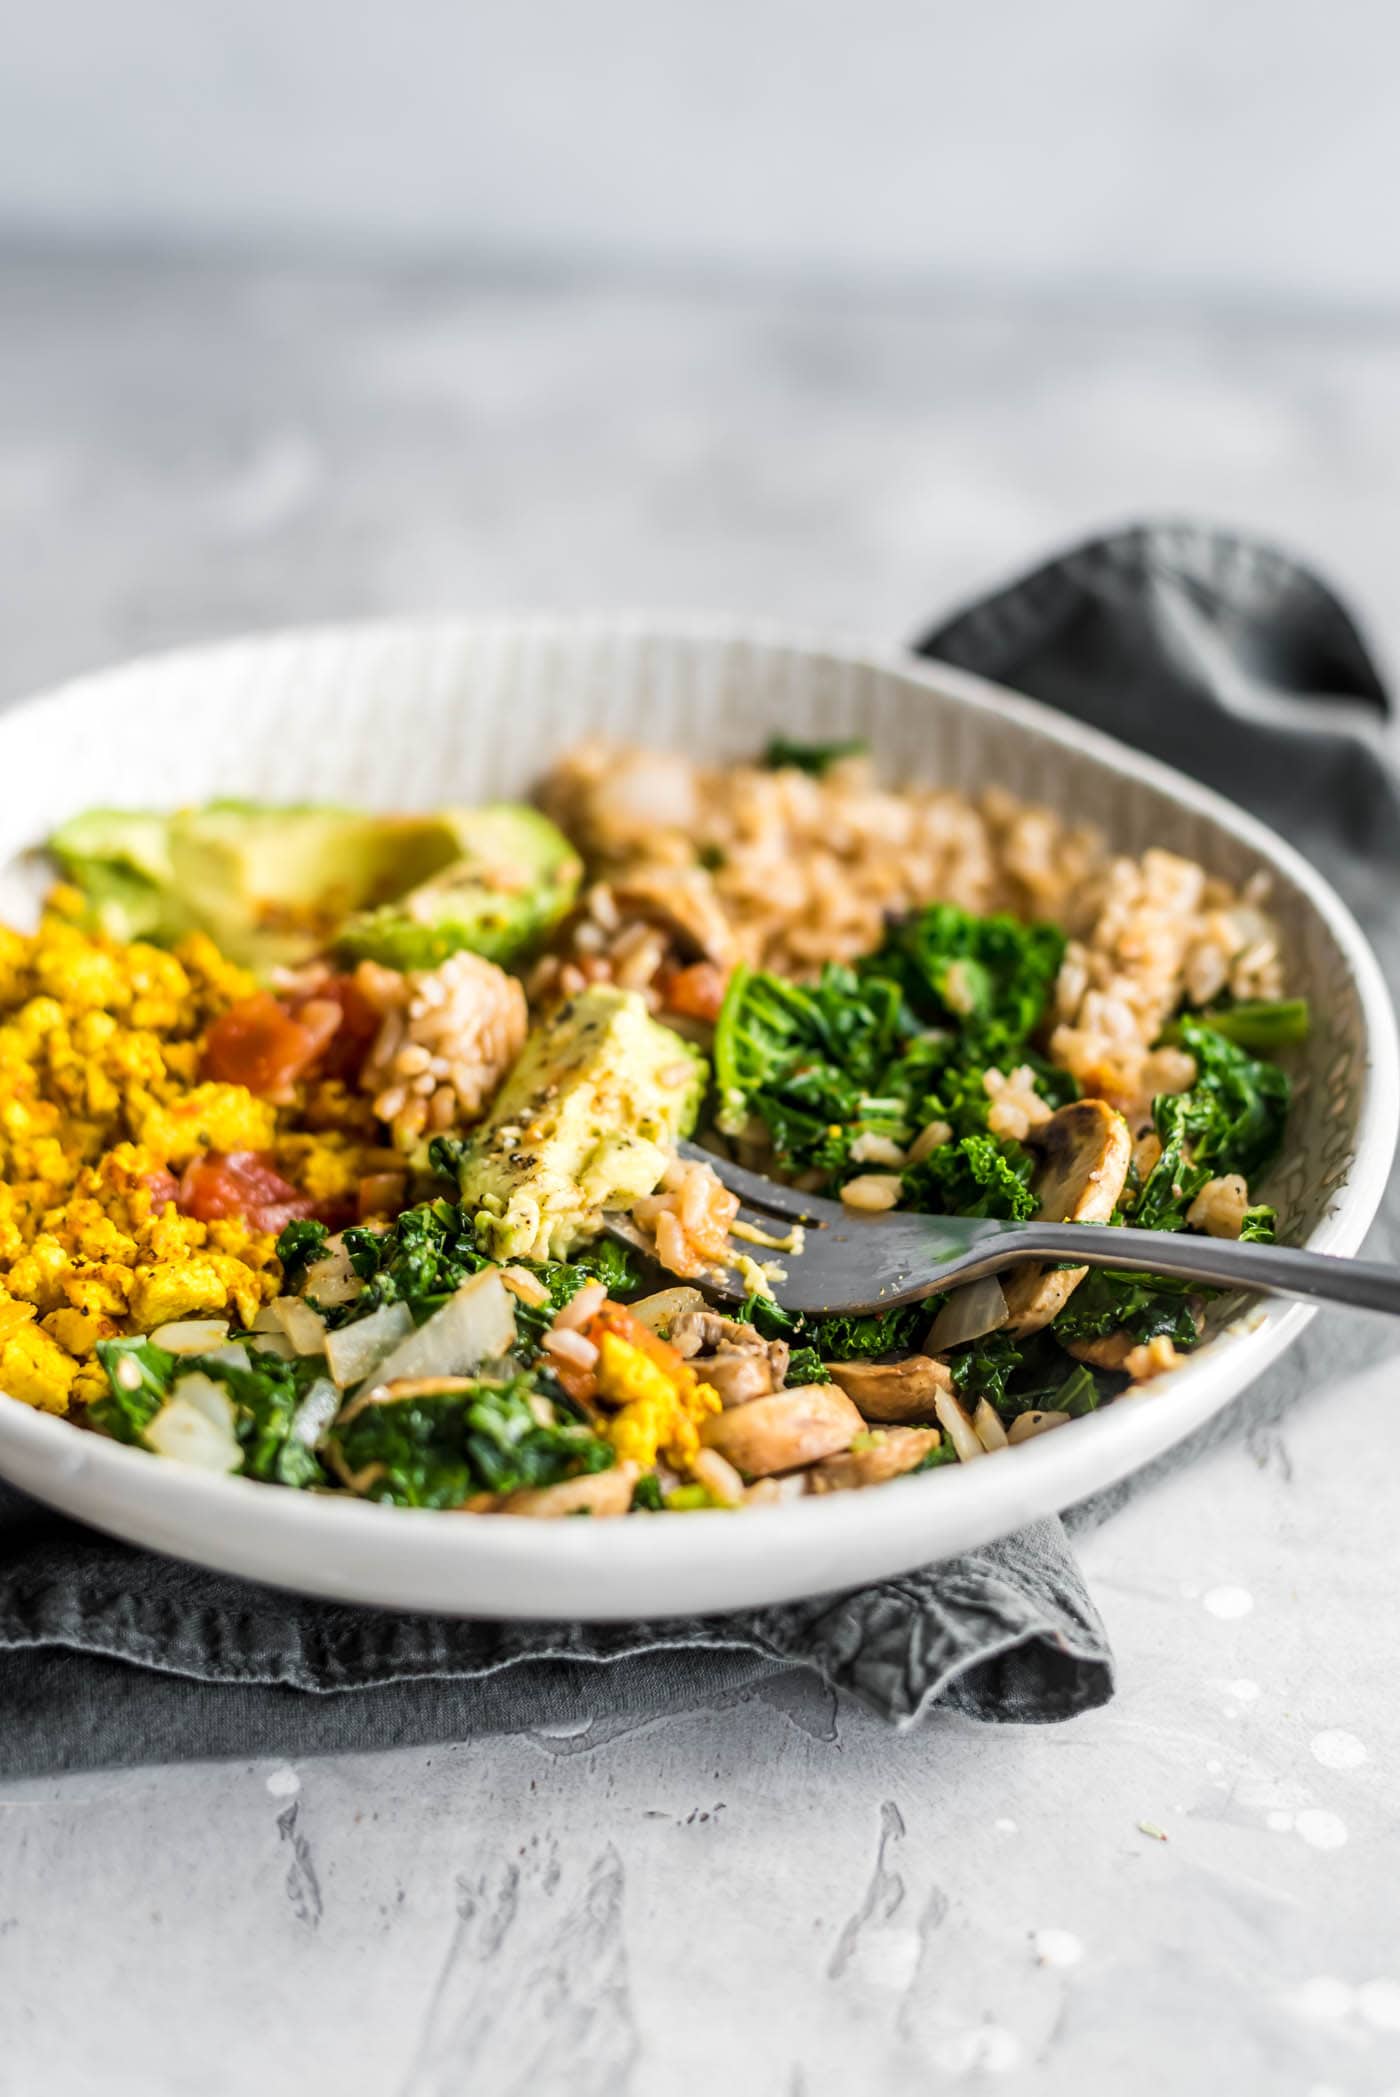 https://runningonrealfood.com/wp-content/uploads/2019/04/easy-healthy-savory-vegan-breakfast-bowl-brown-rice-avocado-running-on-real-food-8.jpg